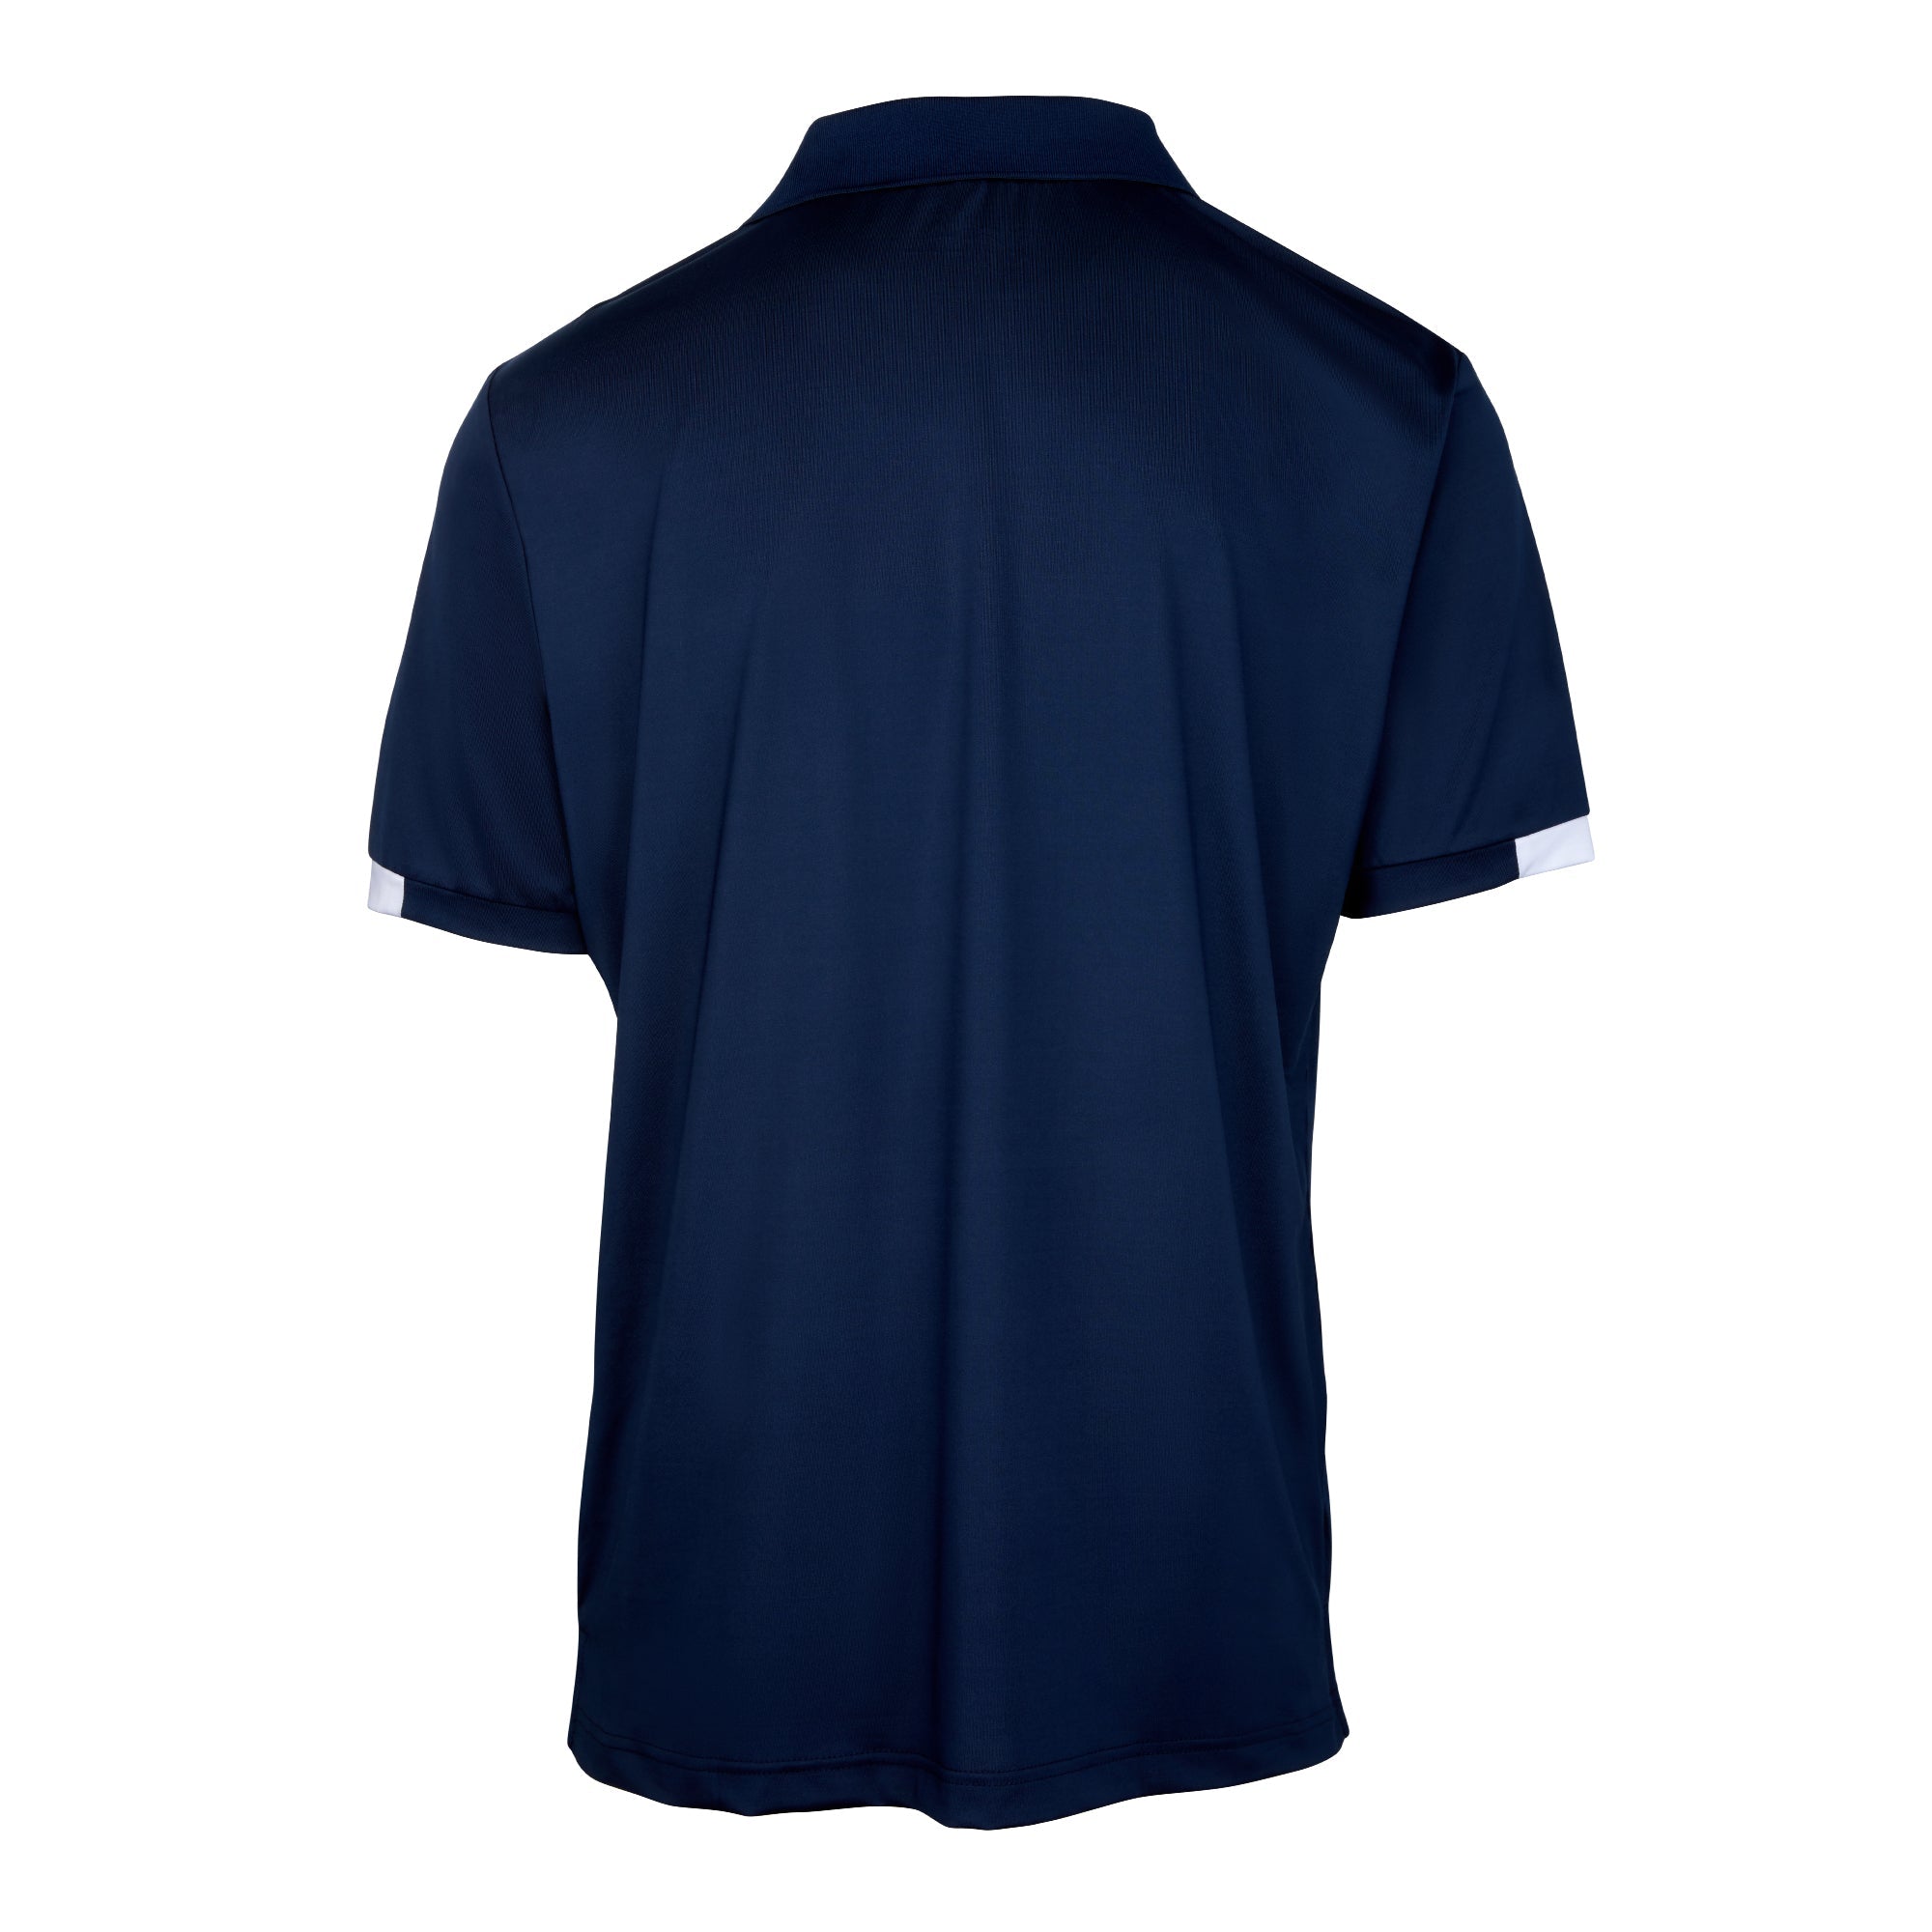 Dri-Fit French Golf Shirt-Men's Bold Two Line T-shirt 6955 - My Golf Shirts